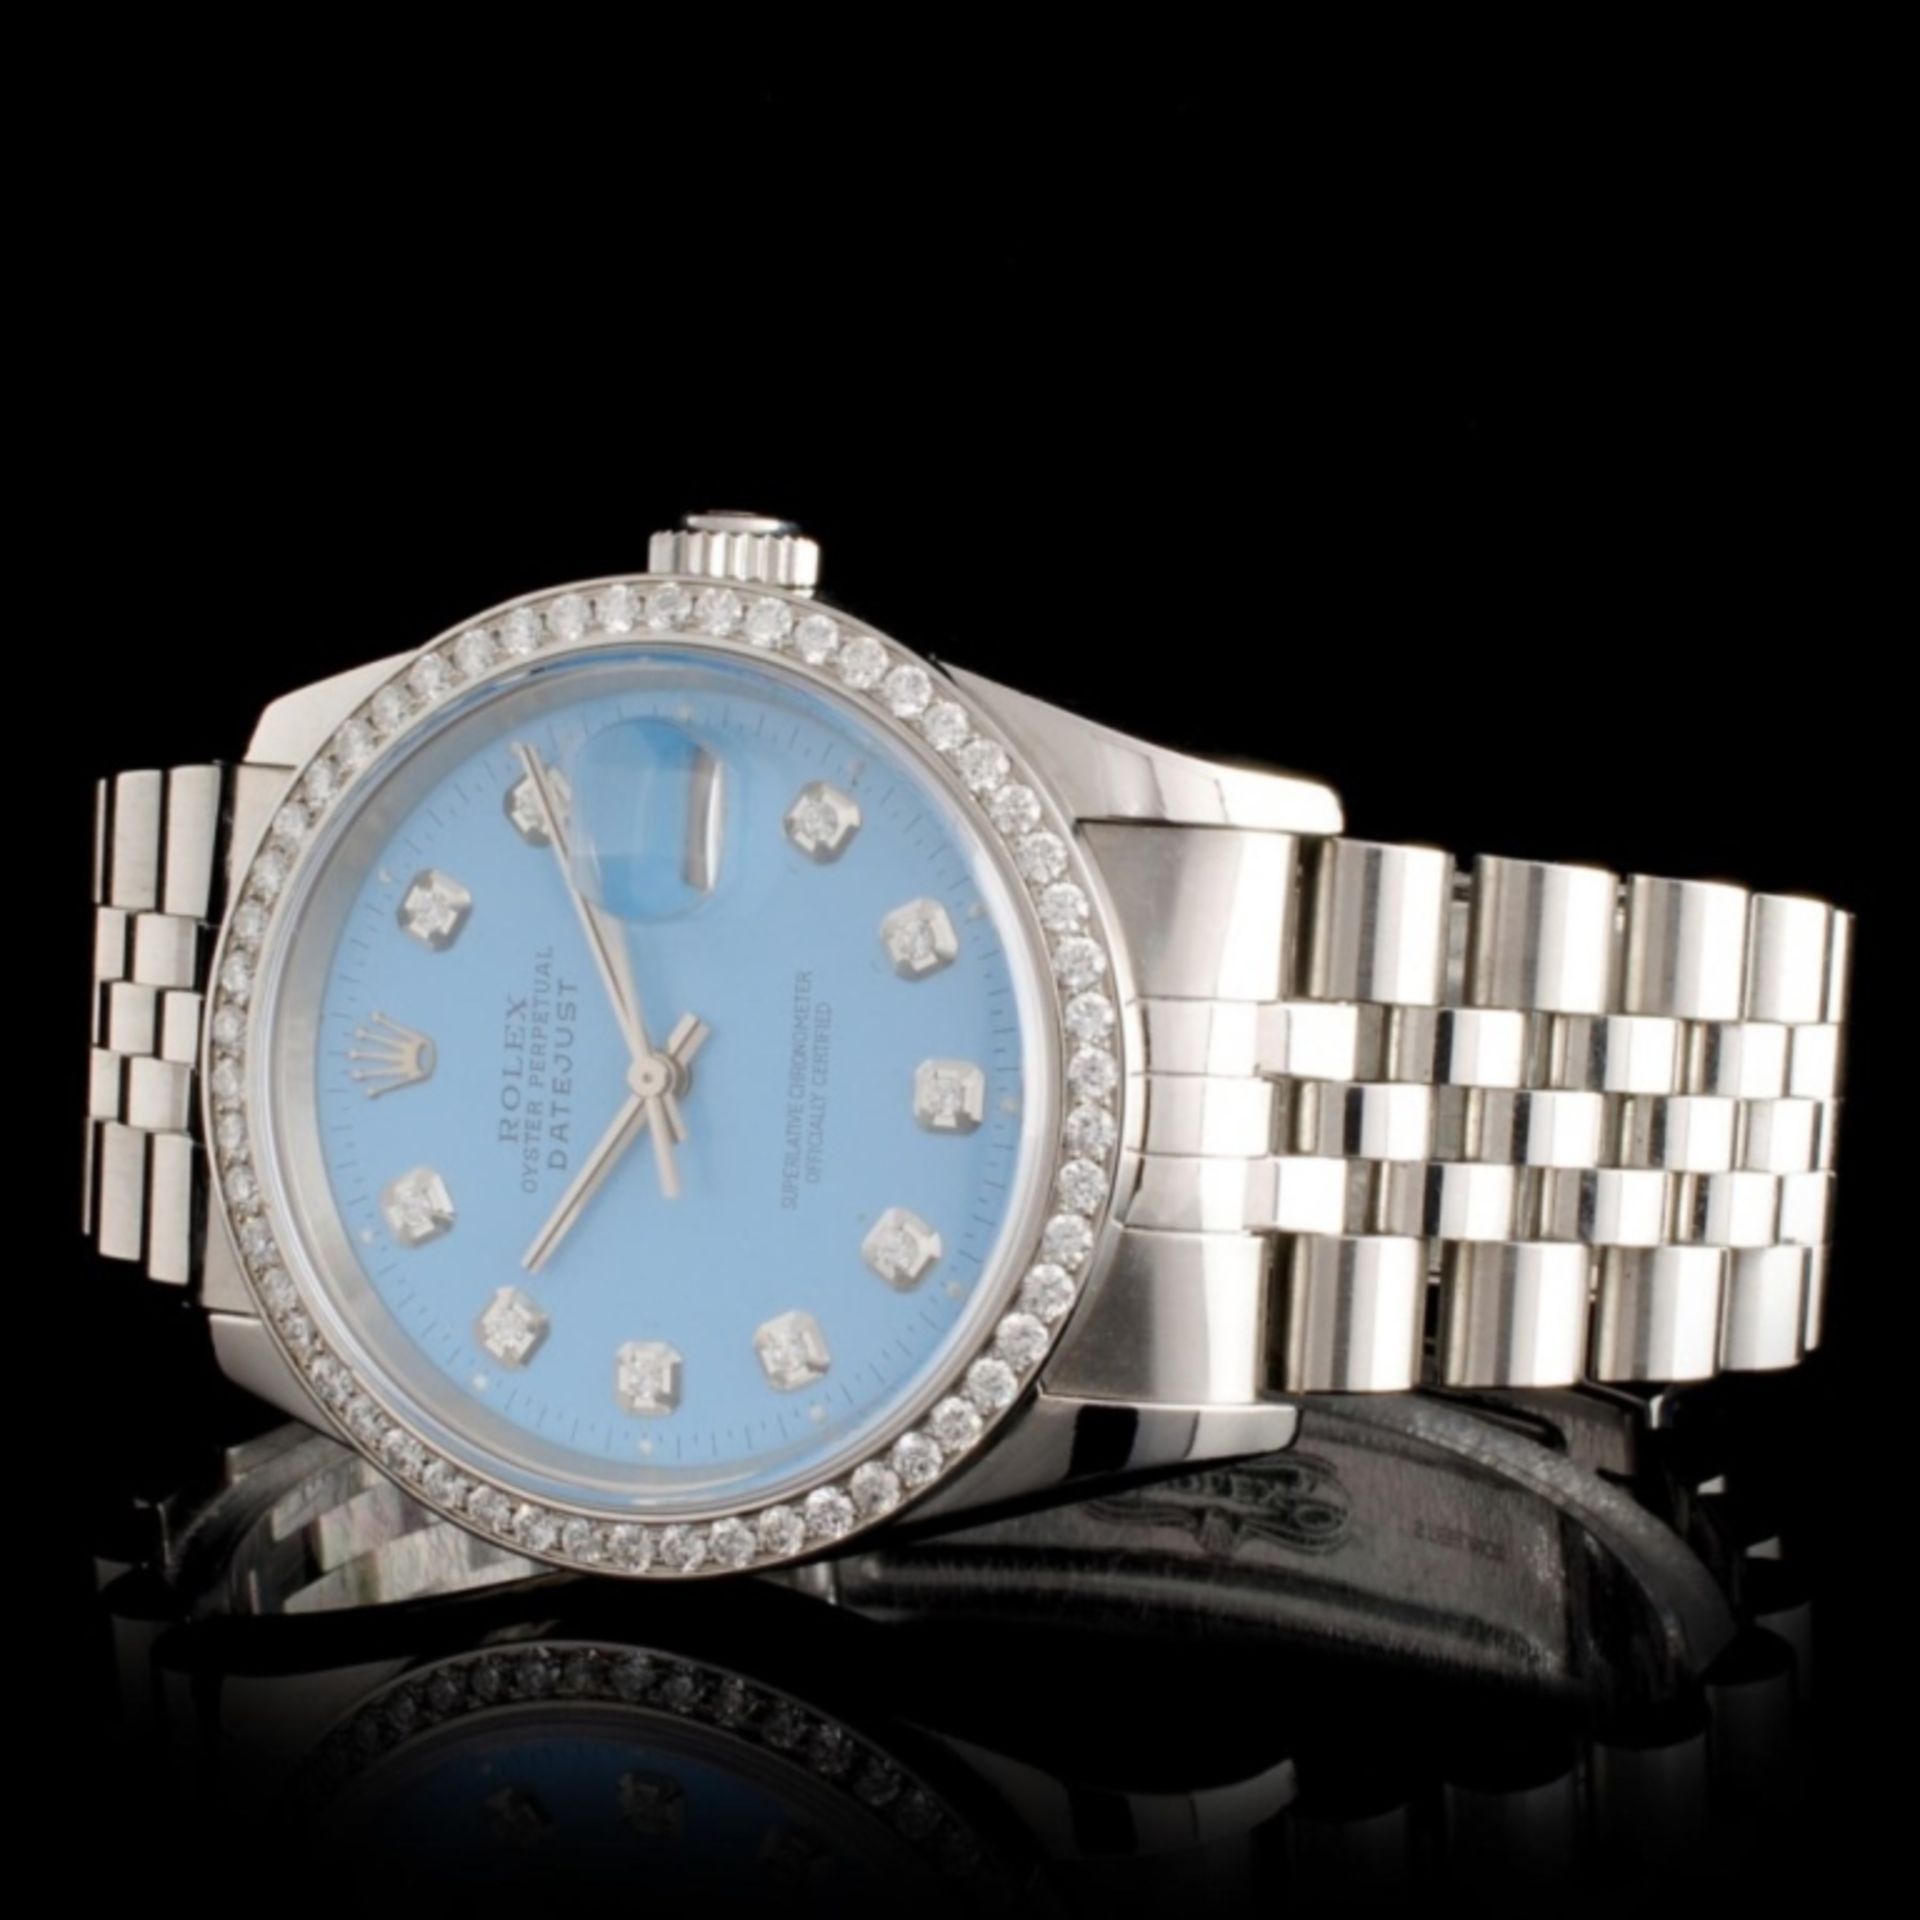 Rolex SS DateJust Diamond 36mm Watch - Image 2 of 4